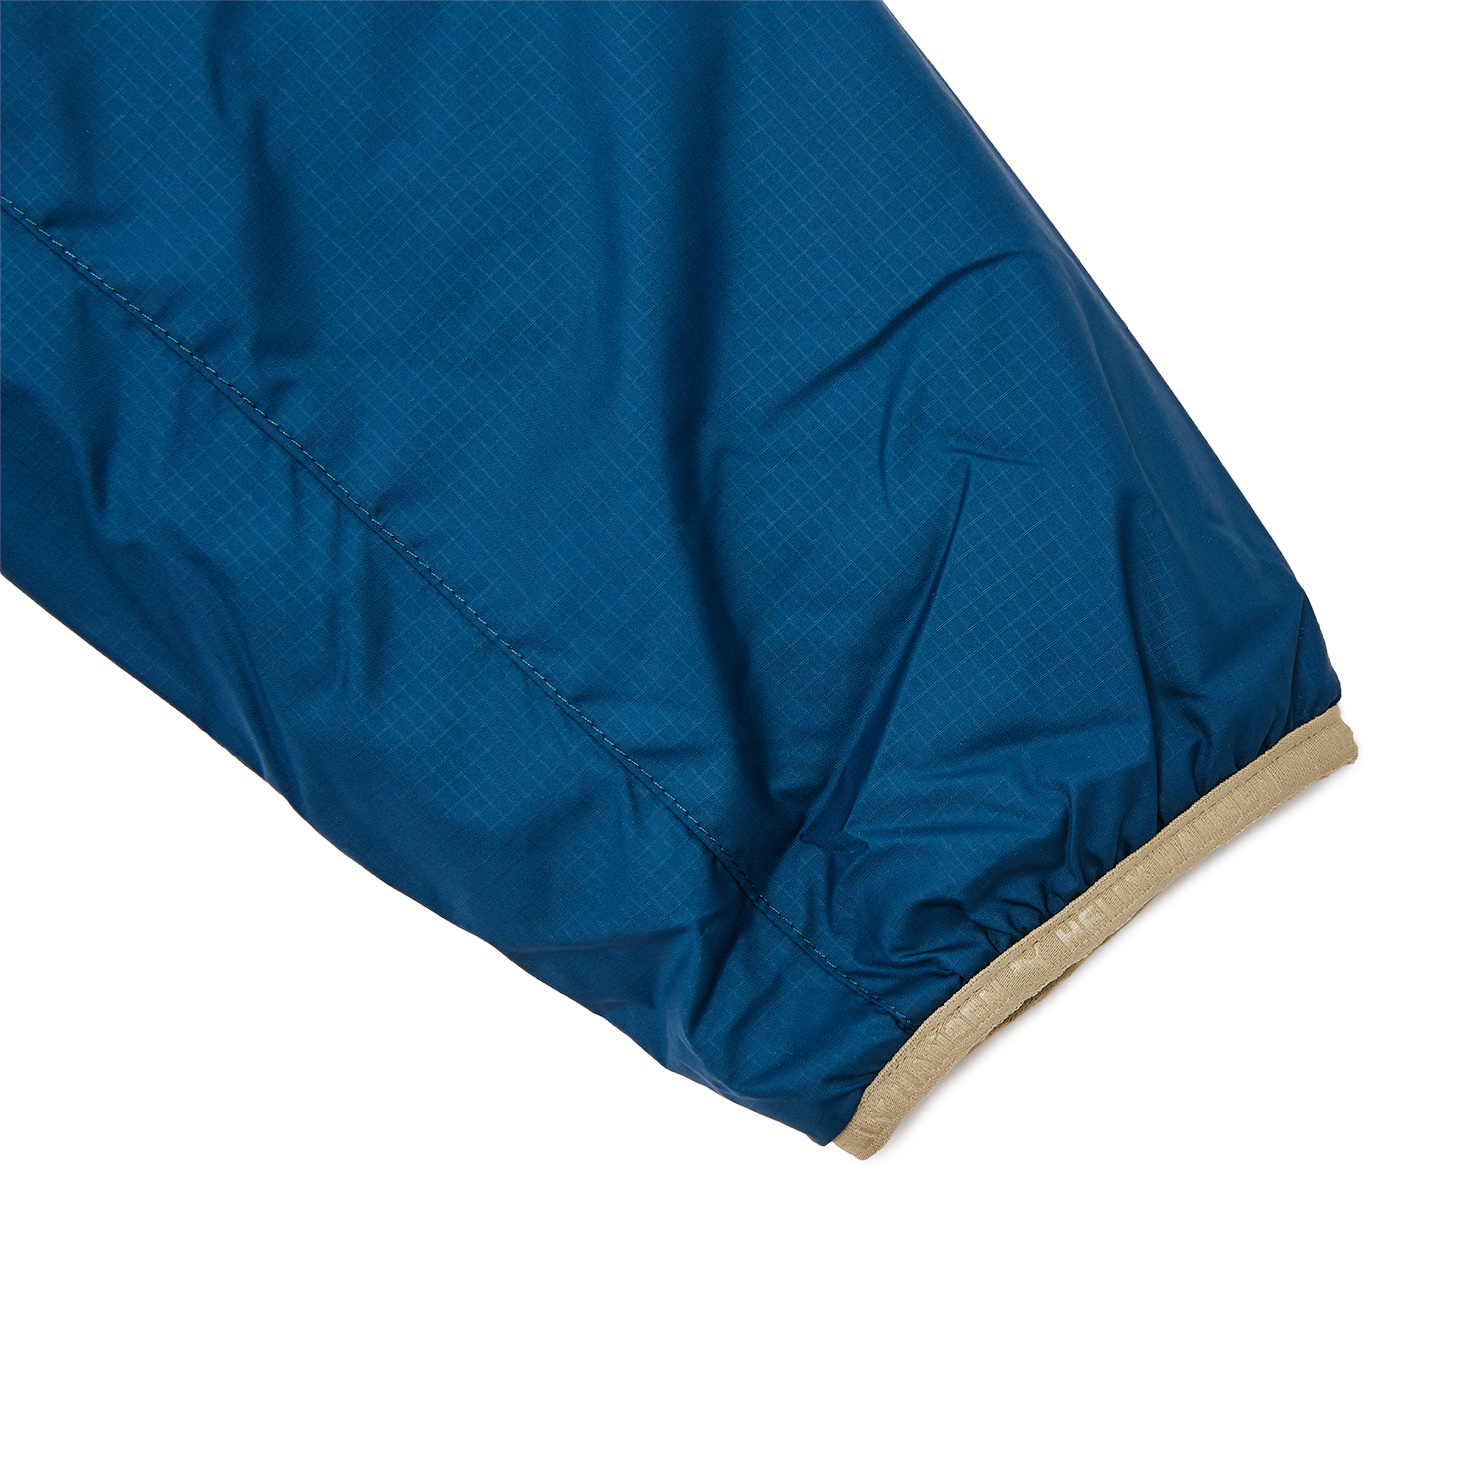 PUMA x HELLY HANSEN Rev. Padded Jacket I PUMA, размер L, цвет синий PM532841 - фото 5